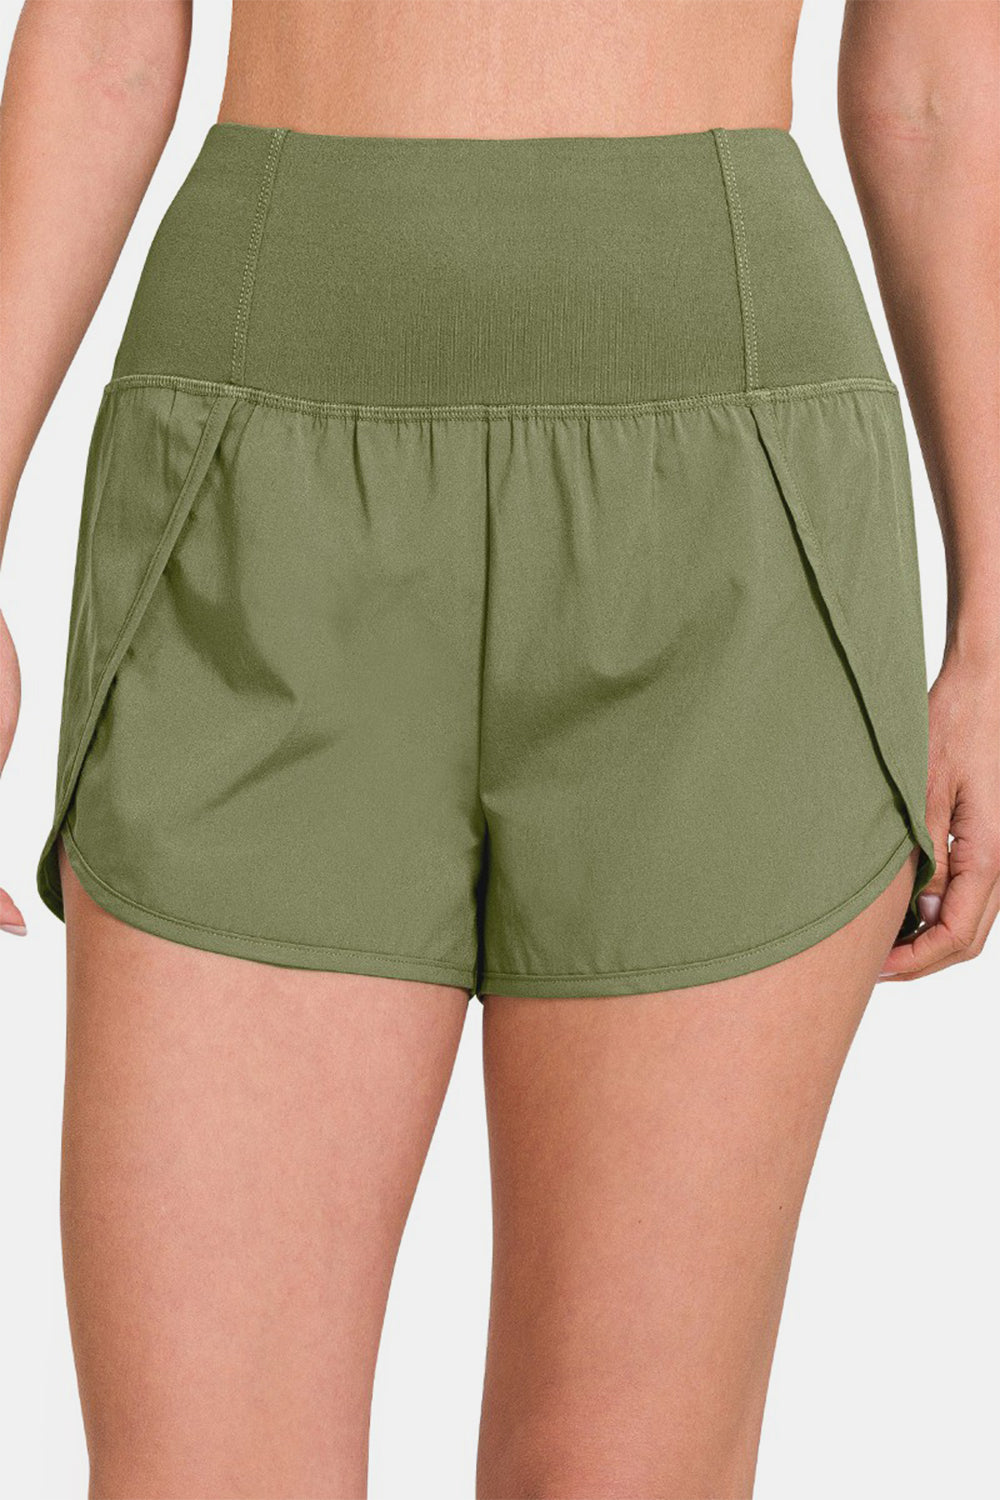 Zenana High-Waisted Zippered Back Pocket Active Shorts - SELFTRITSS